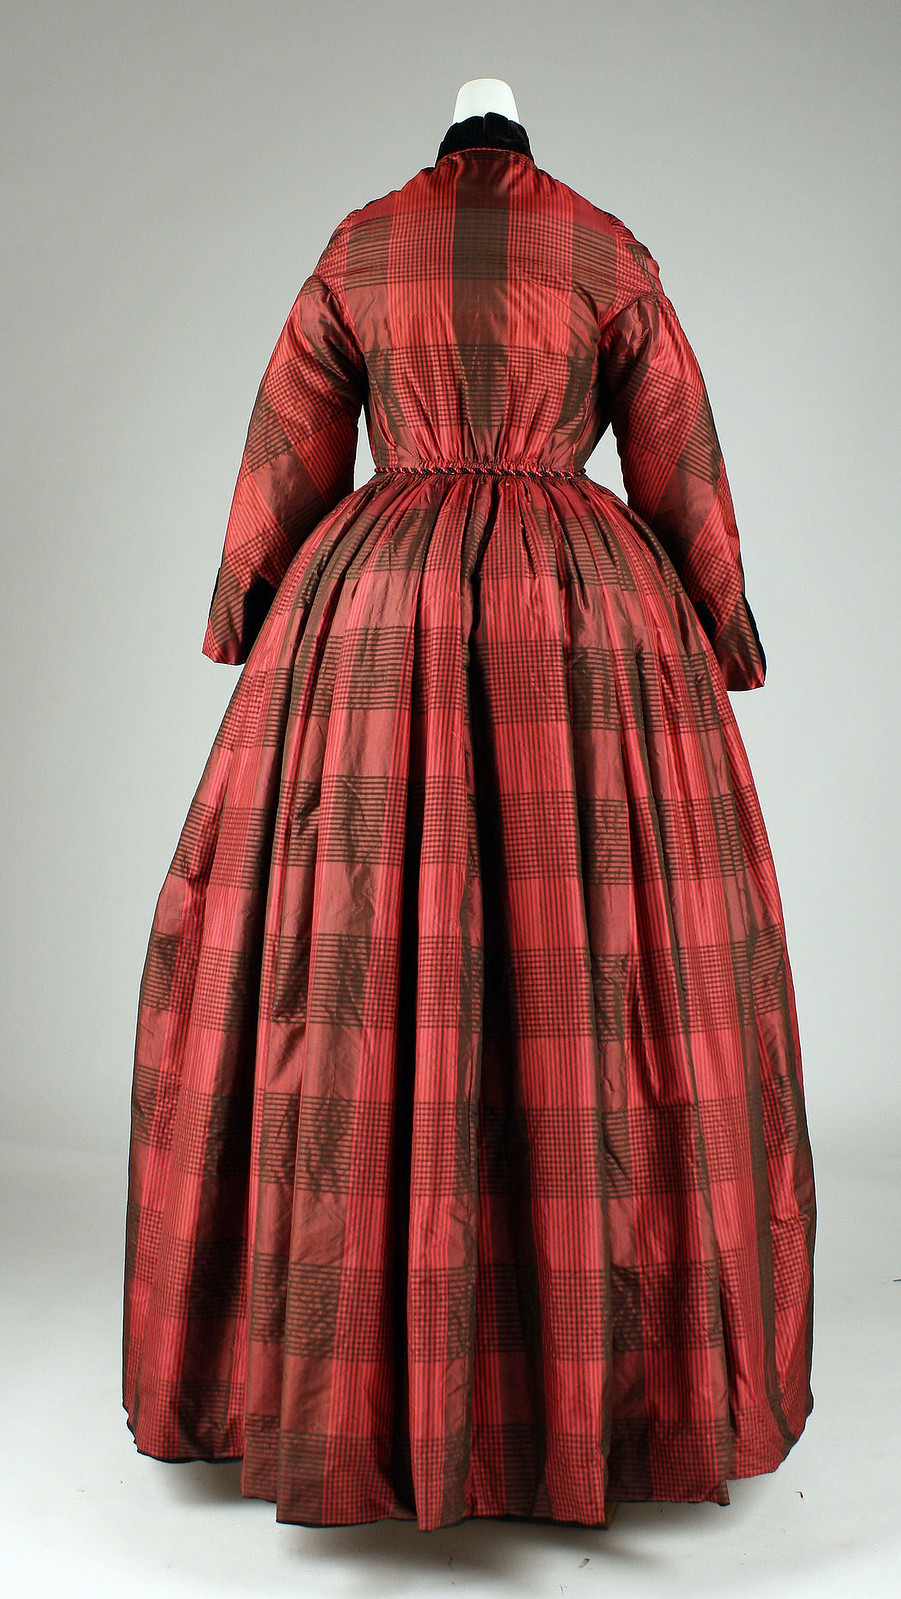 Dressing gown, c.1855, American, metmuseum